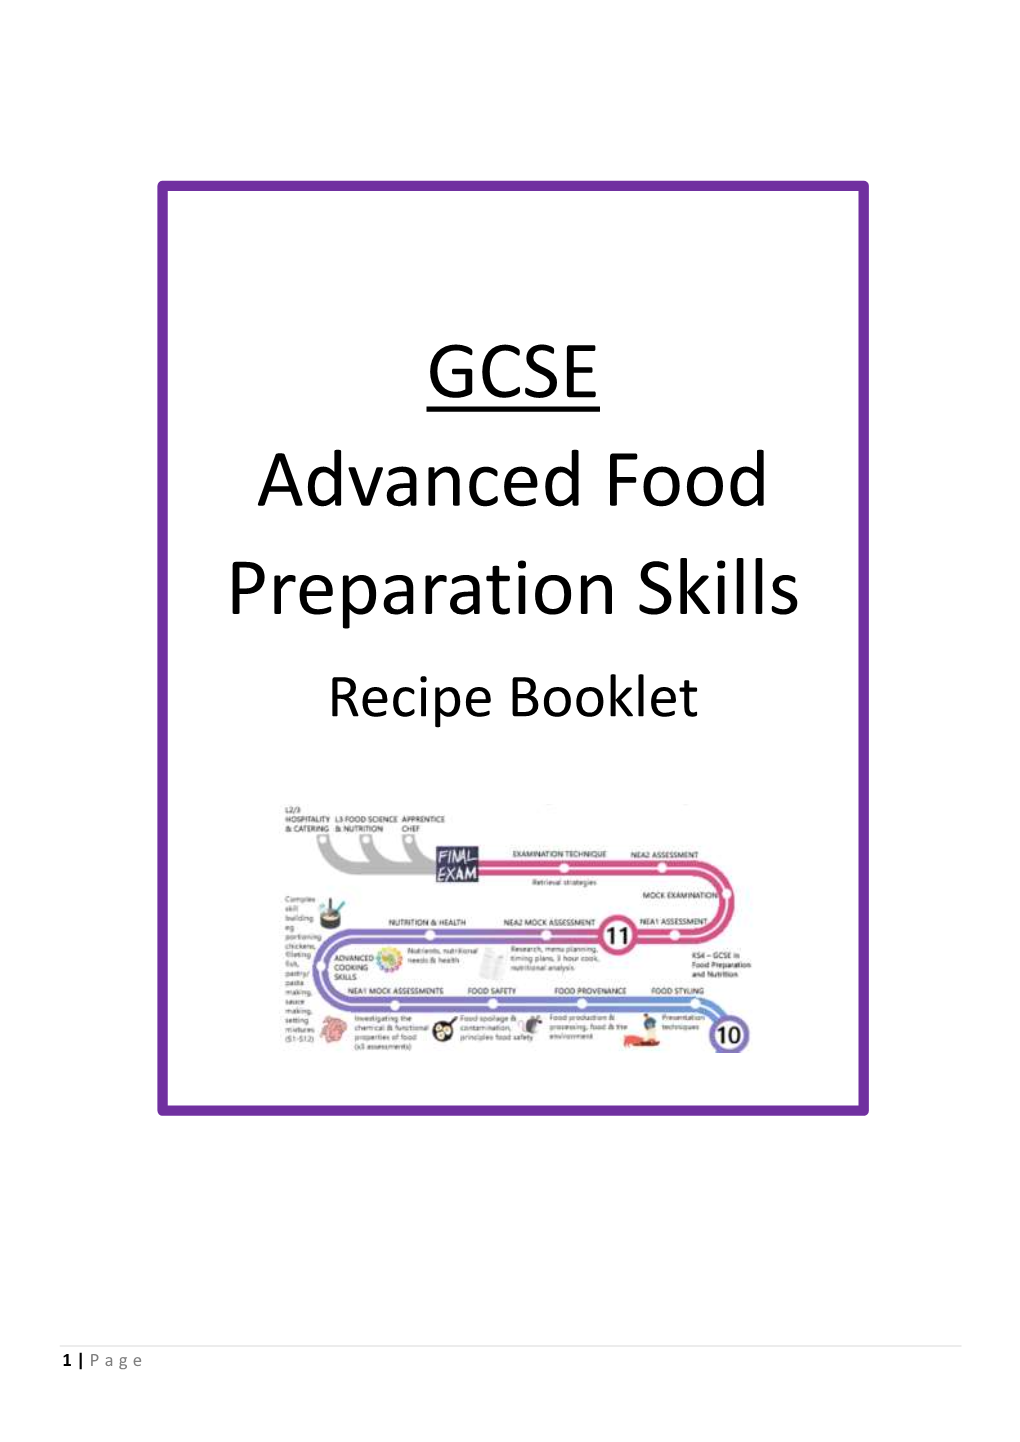 GCSE Advanced Food Preparation Skills Recipe Booklet